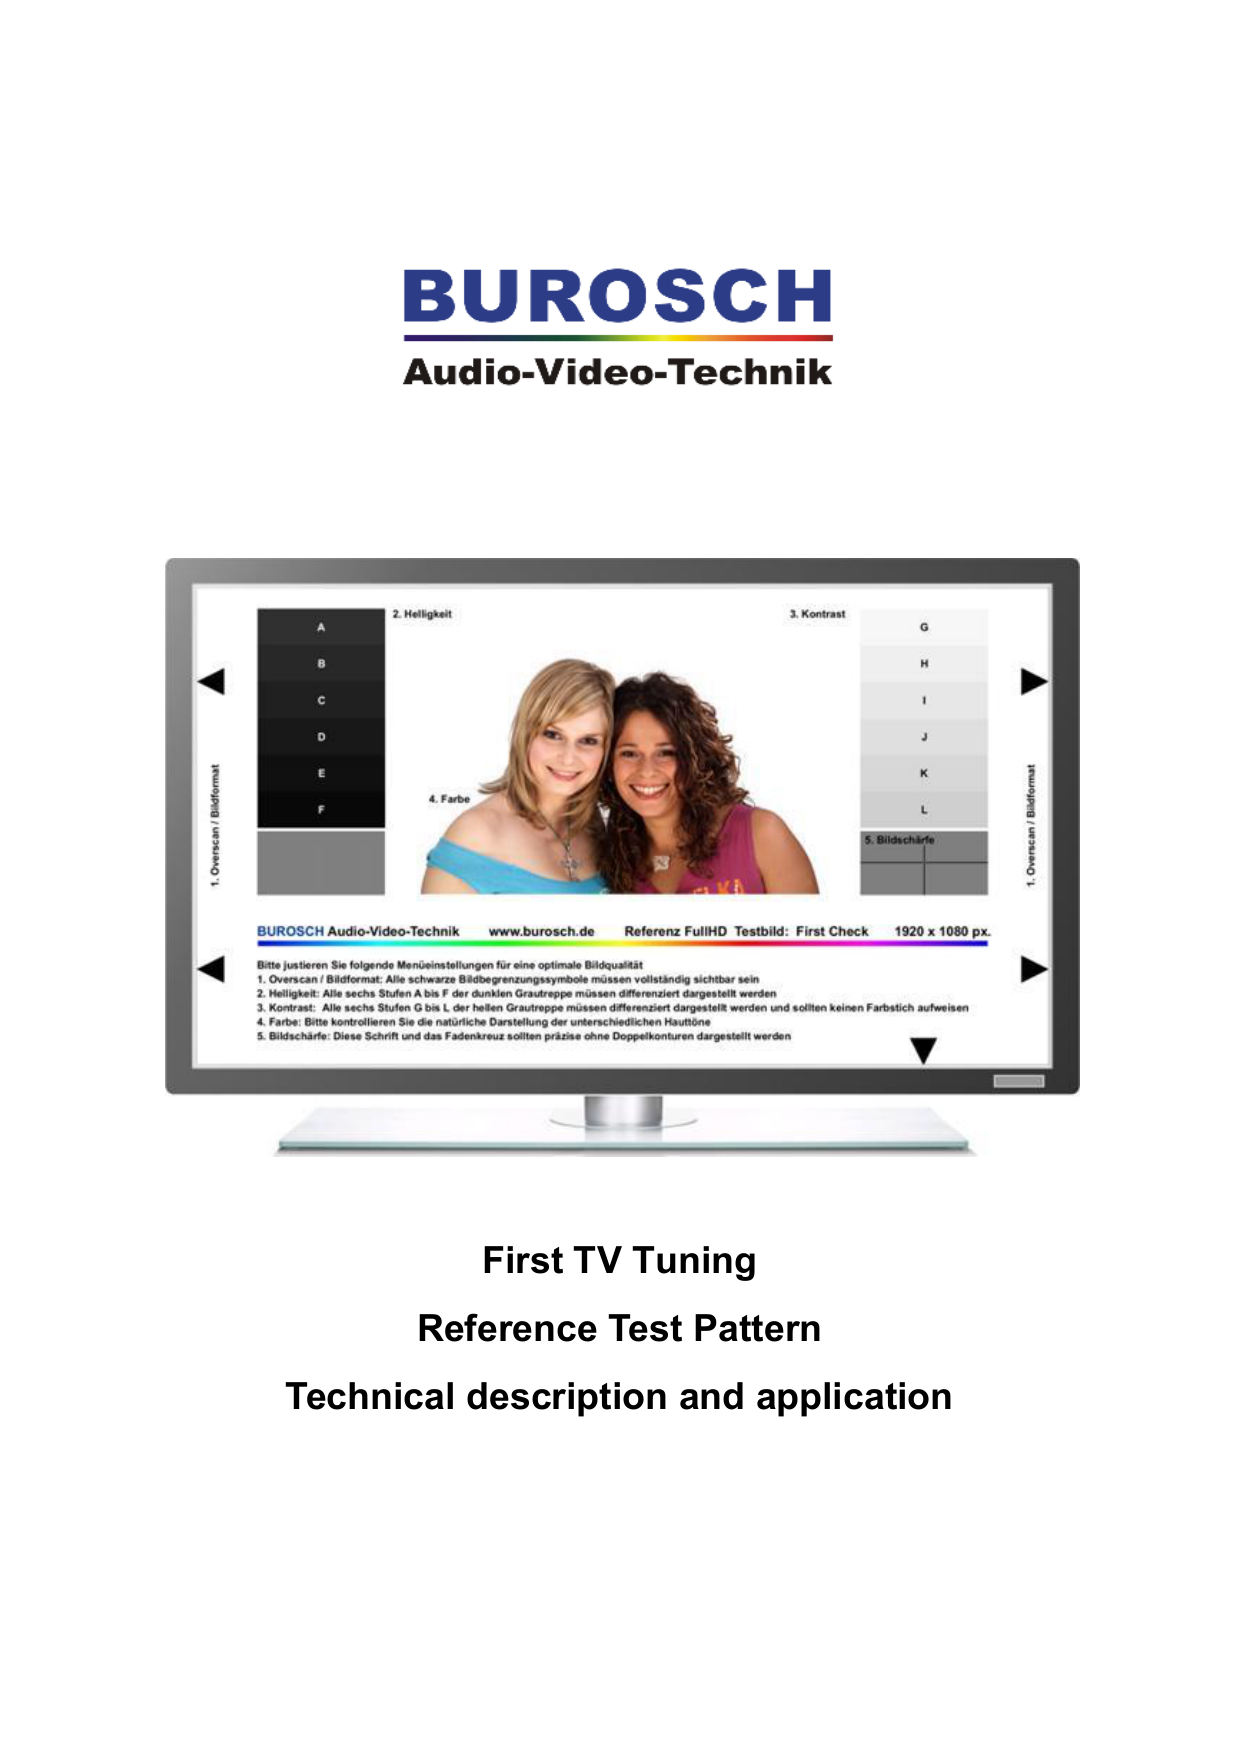 Burosch ladies full hd testbild download